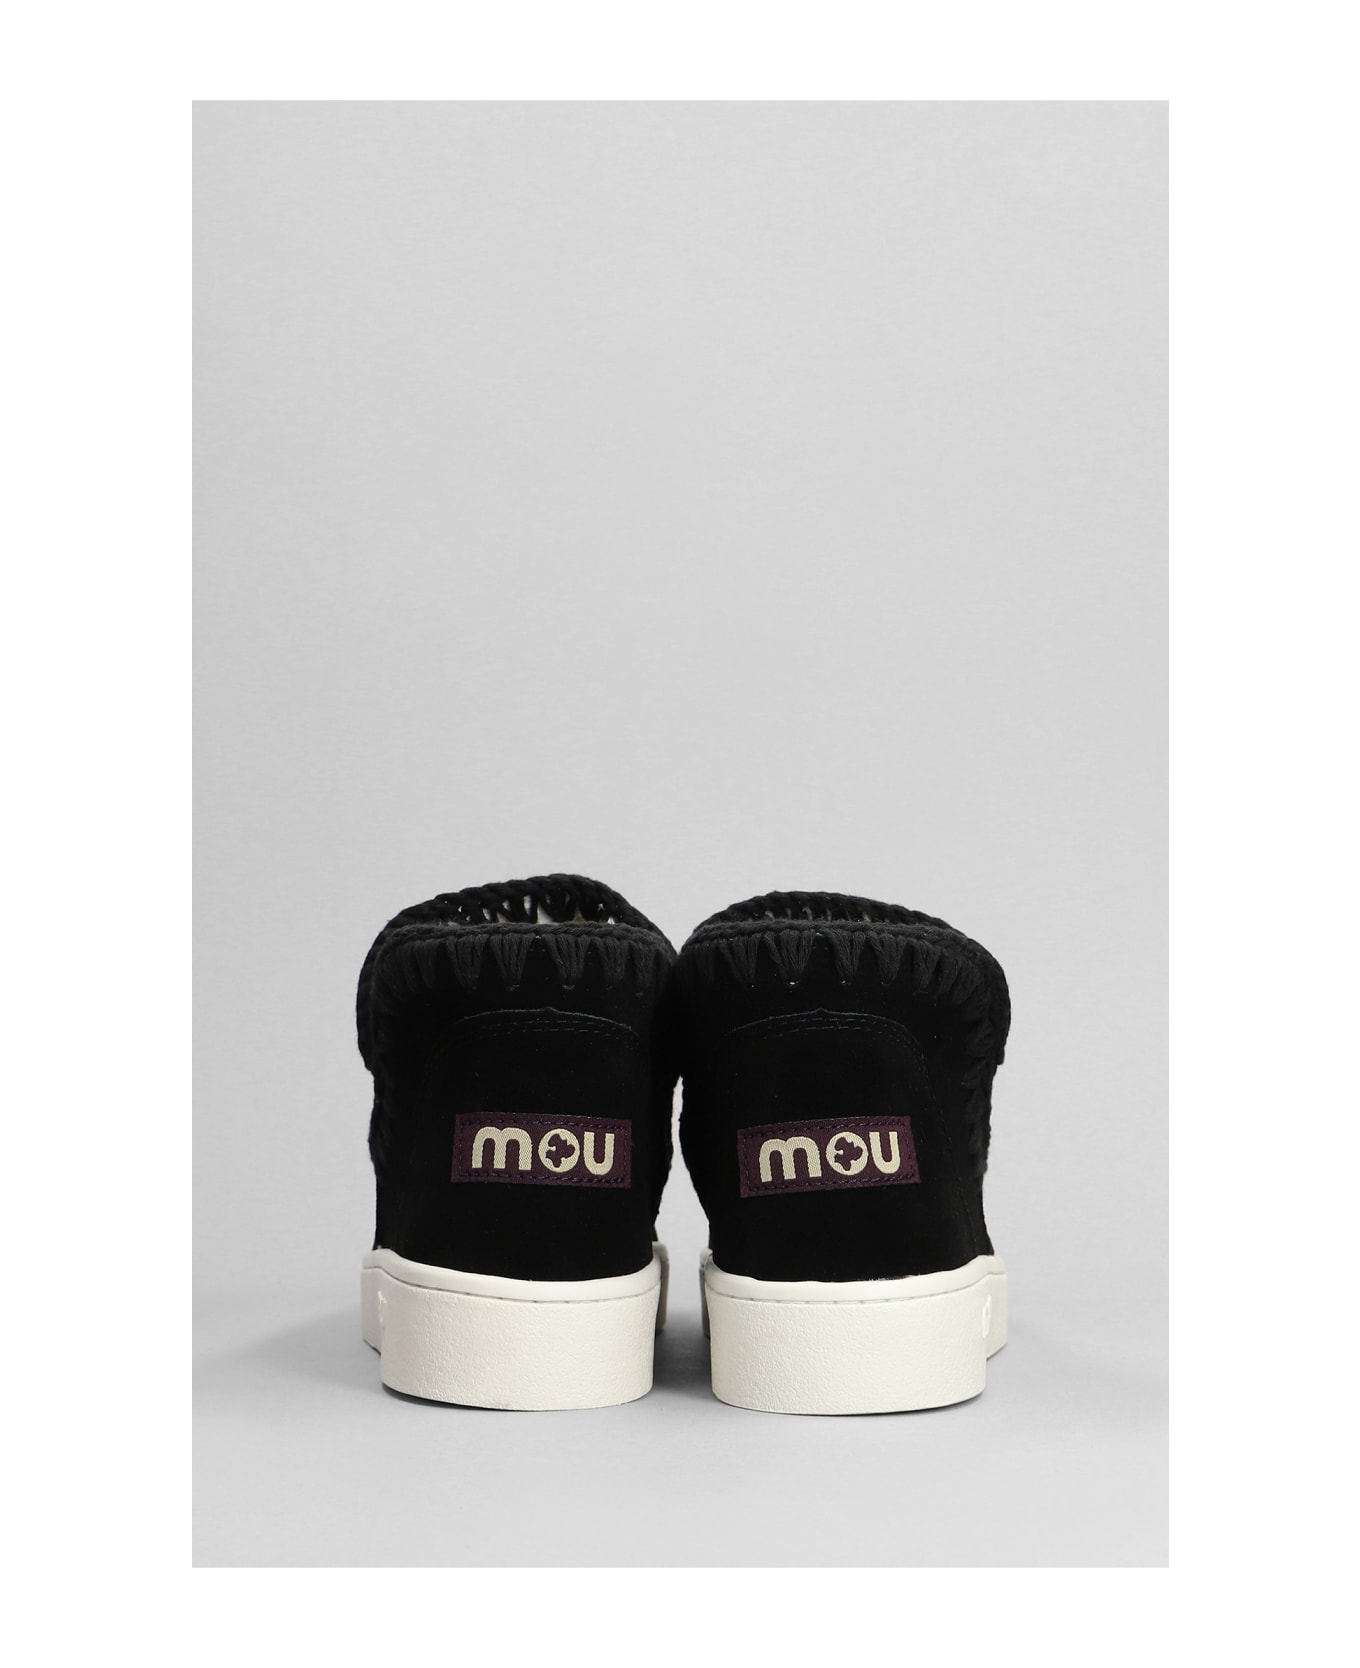 Mou Eskimo Sneaker Low Heels Ankle Boots In Black Suede - black スニーカー